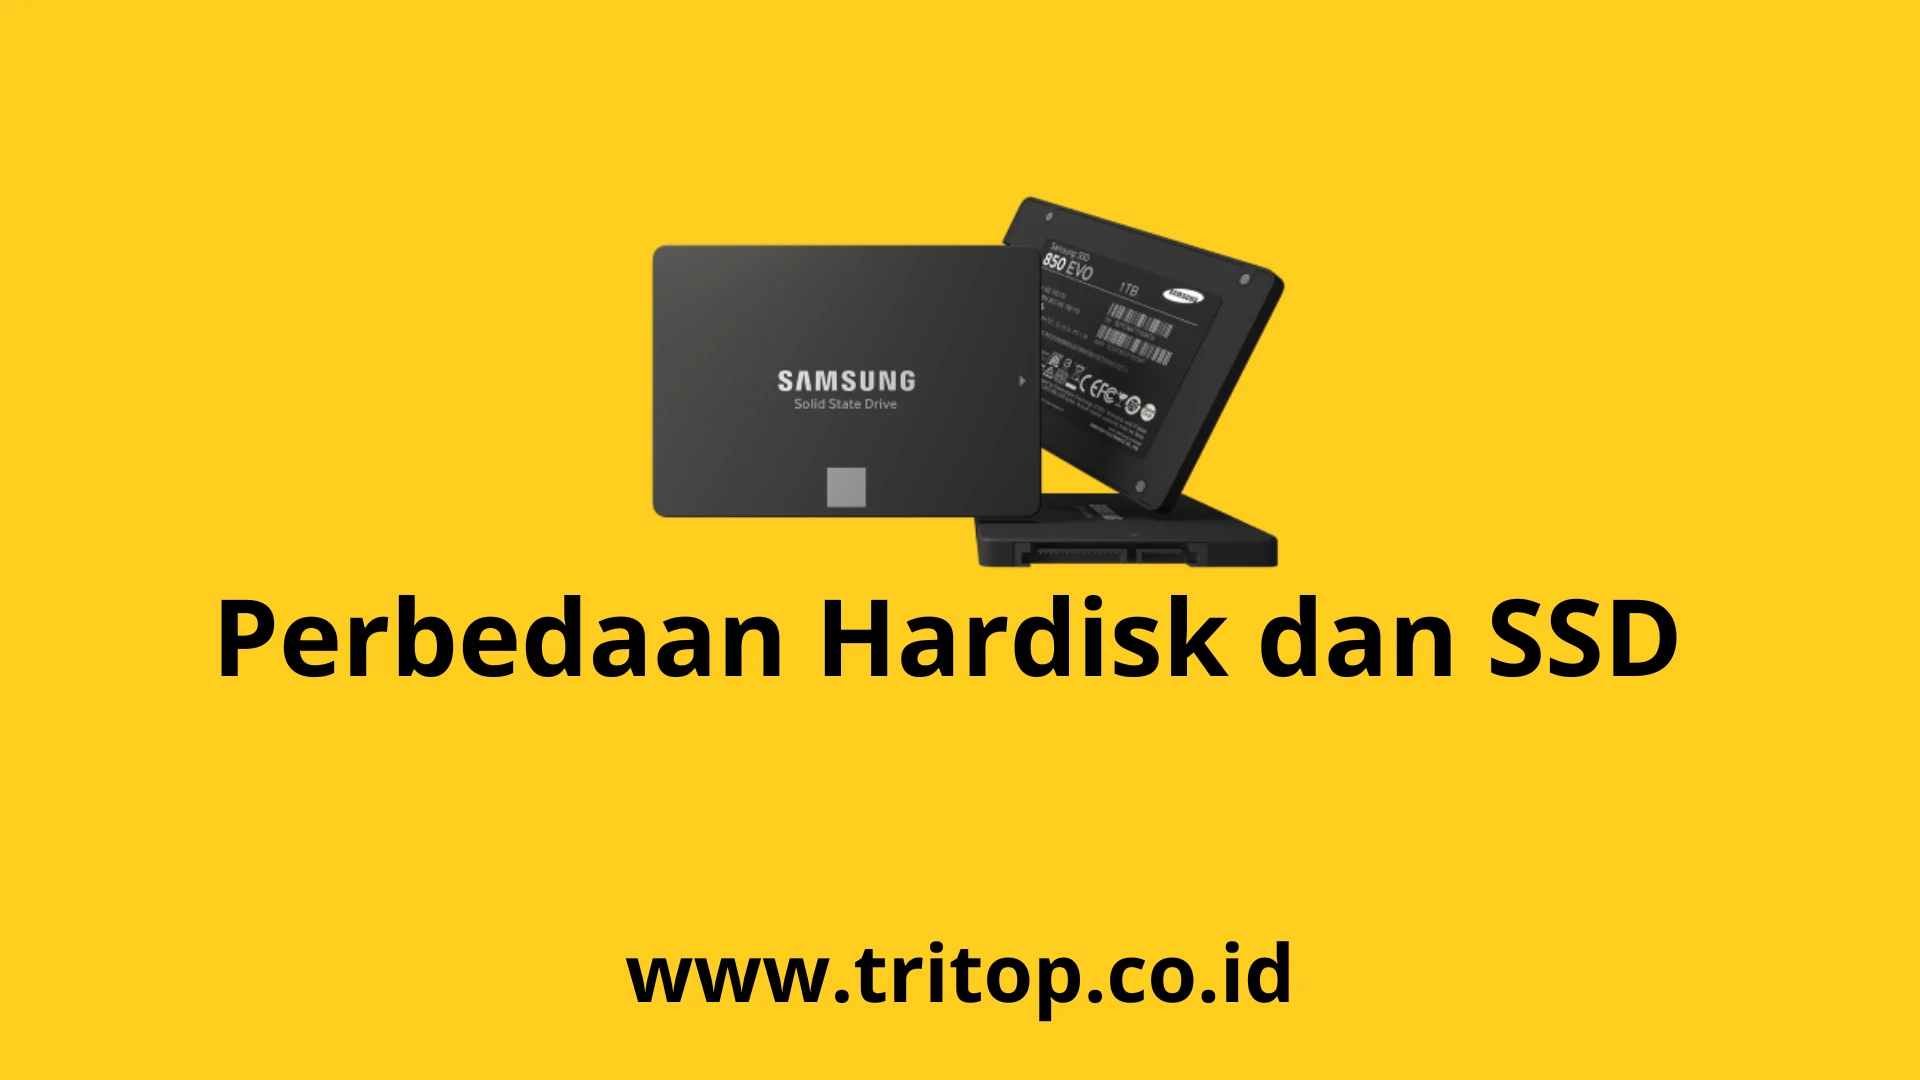 Beda Hardisk dan SSD Tritop.co.id